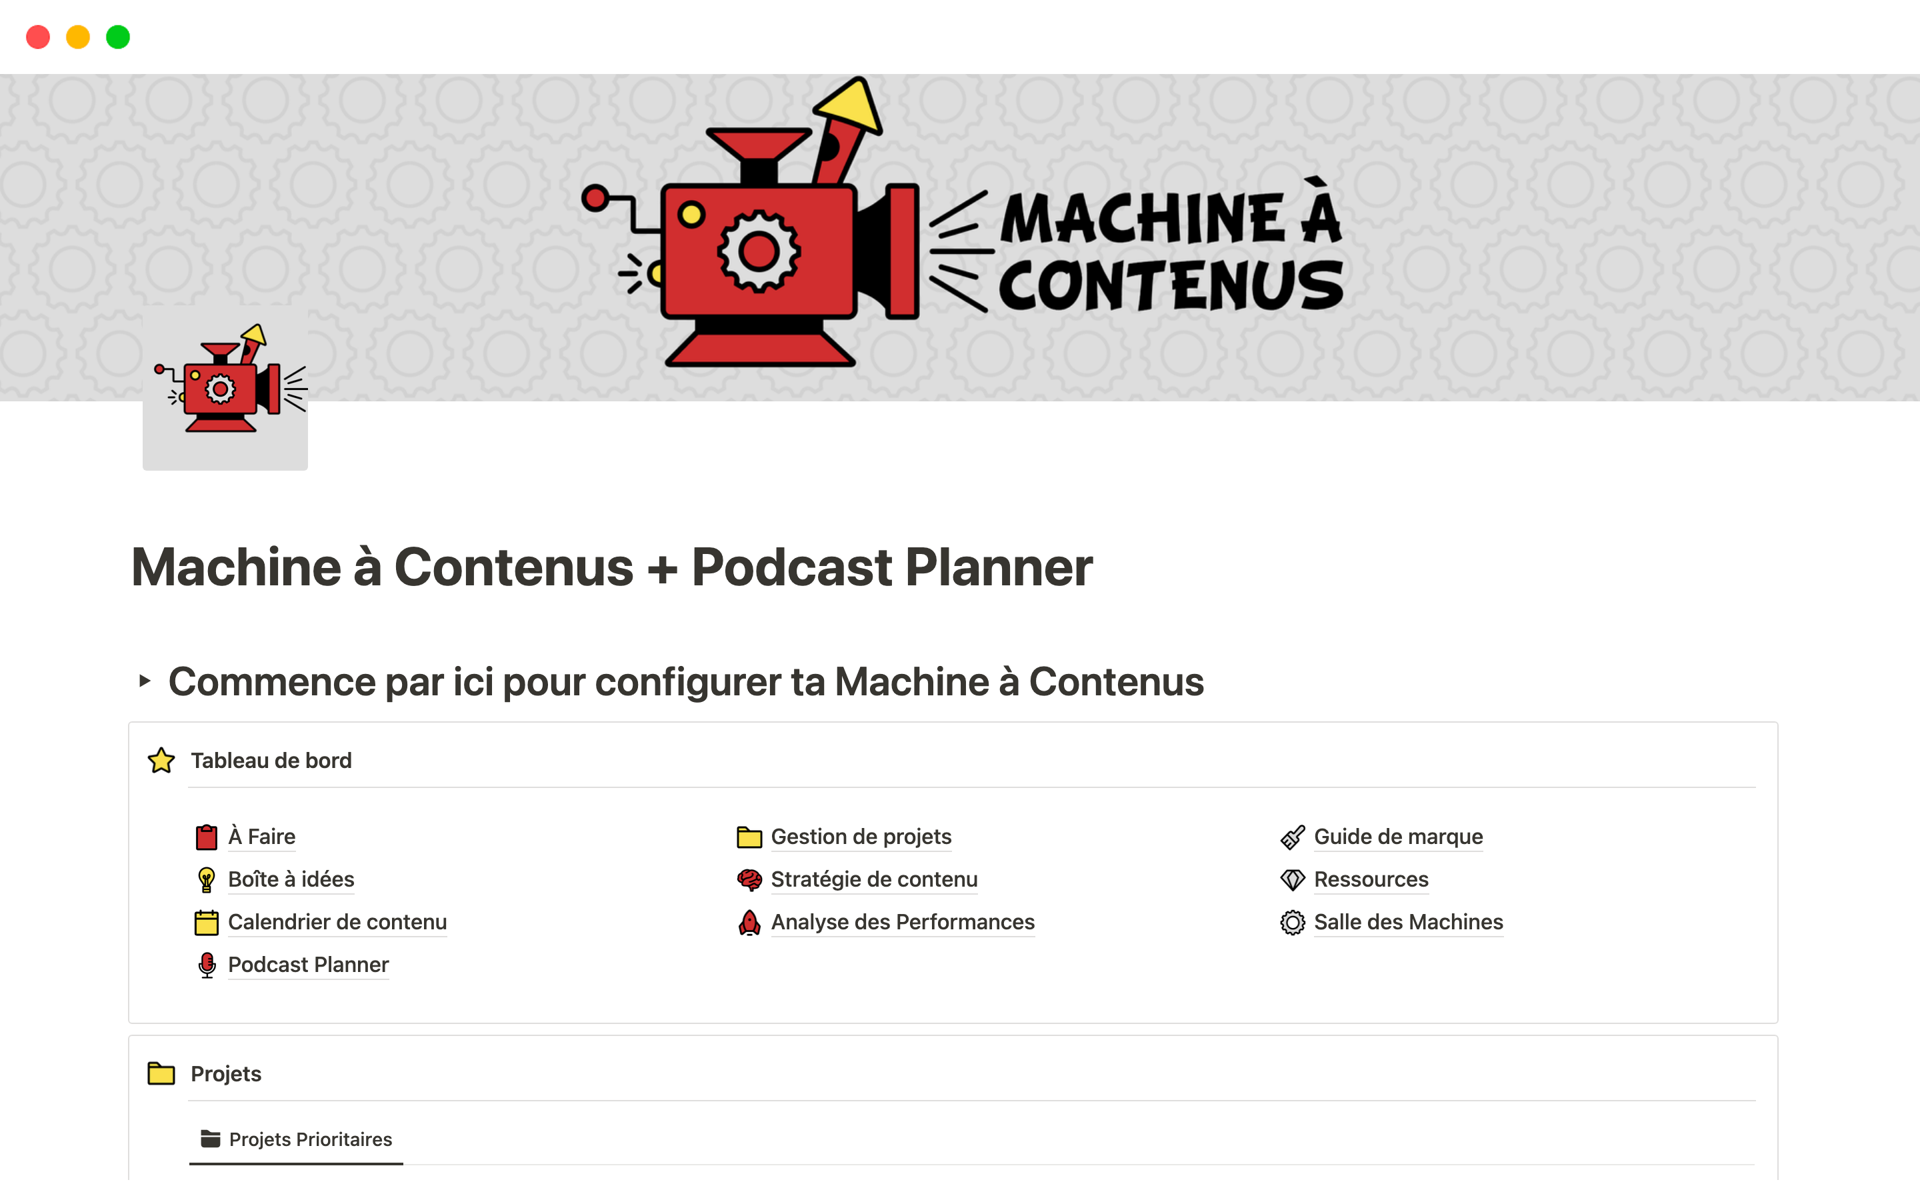 Aperçu du modèle de Machine à Contenus + Podcast Planner